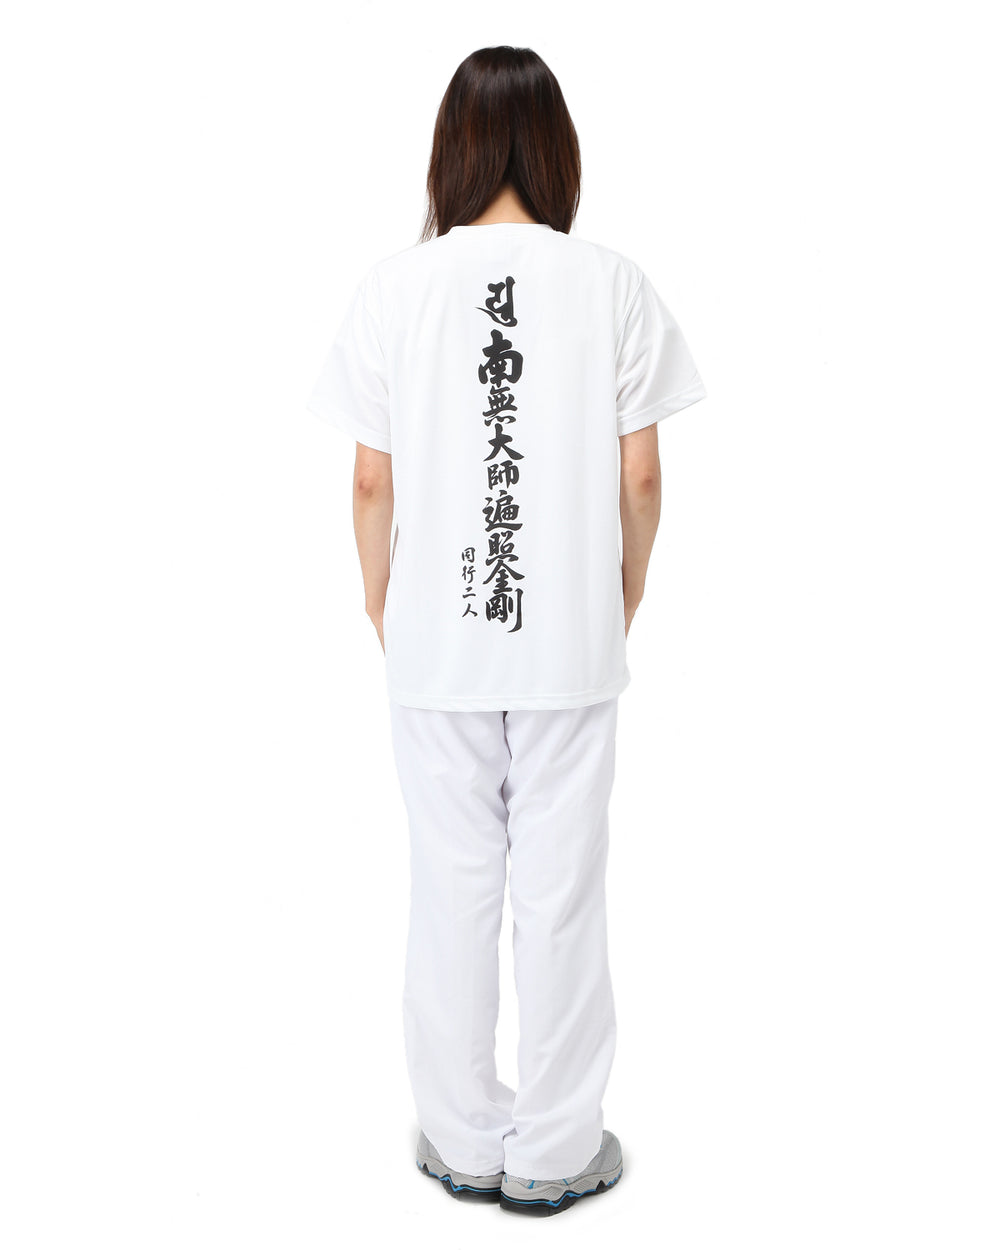 IPPO-IPPO-DO Pilgrimage T-shirt with Printed Phrases on the Back (Namu Daishi Henjō Kongō/南無大師遍照金剛)